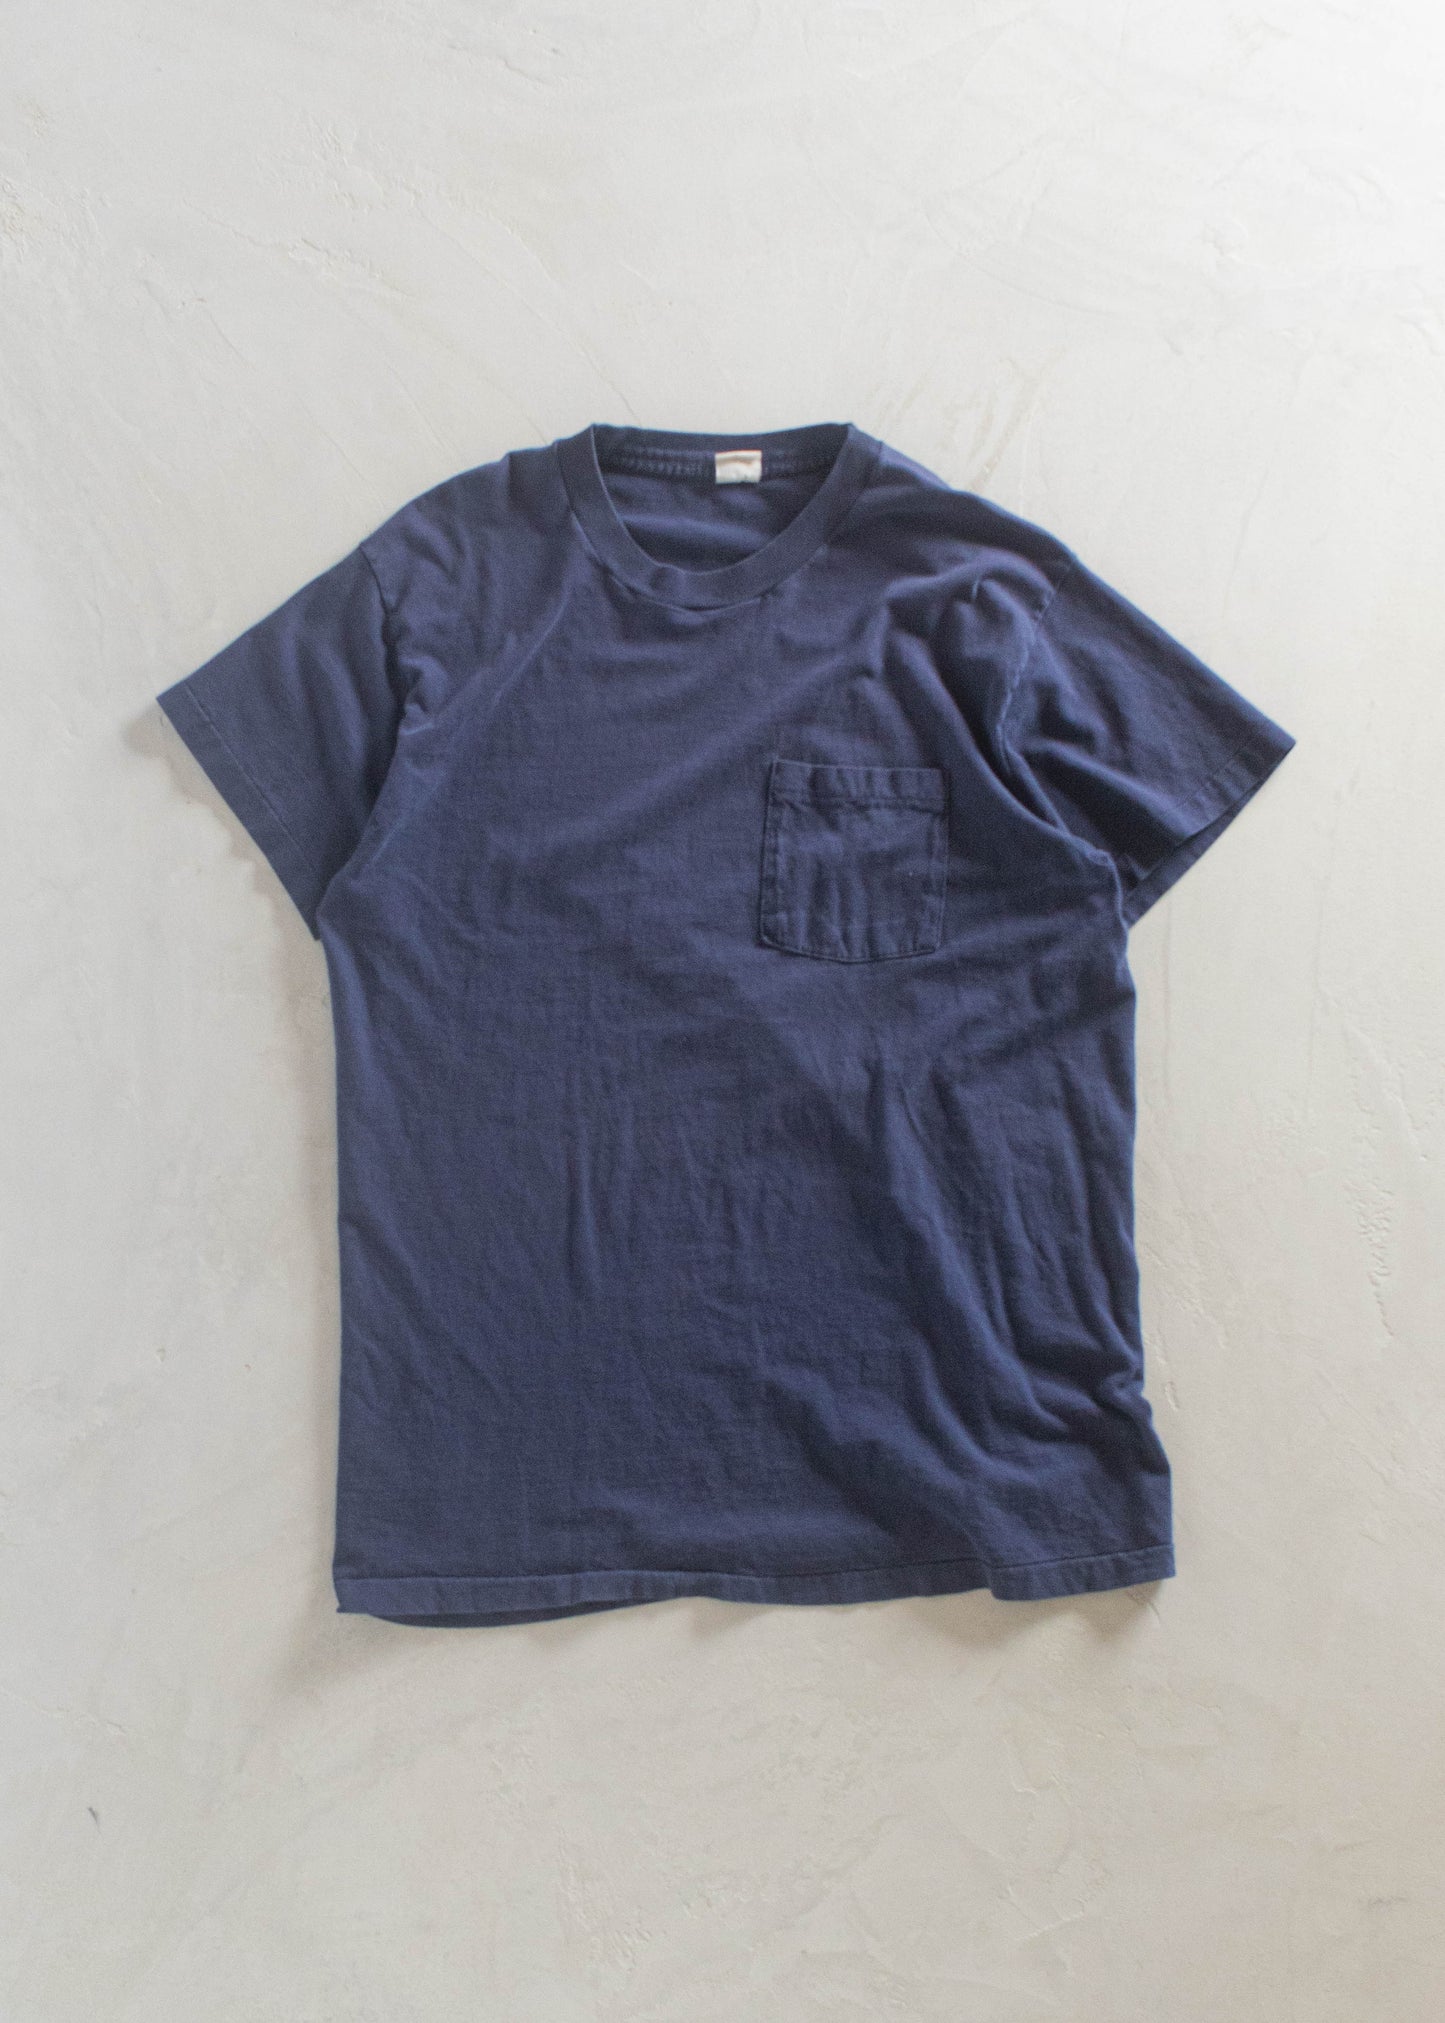 1980s Selvedge Pocket T-Shirt Size M/L